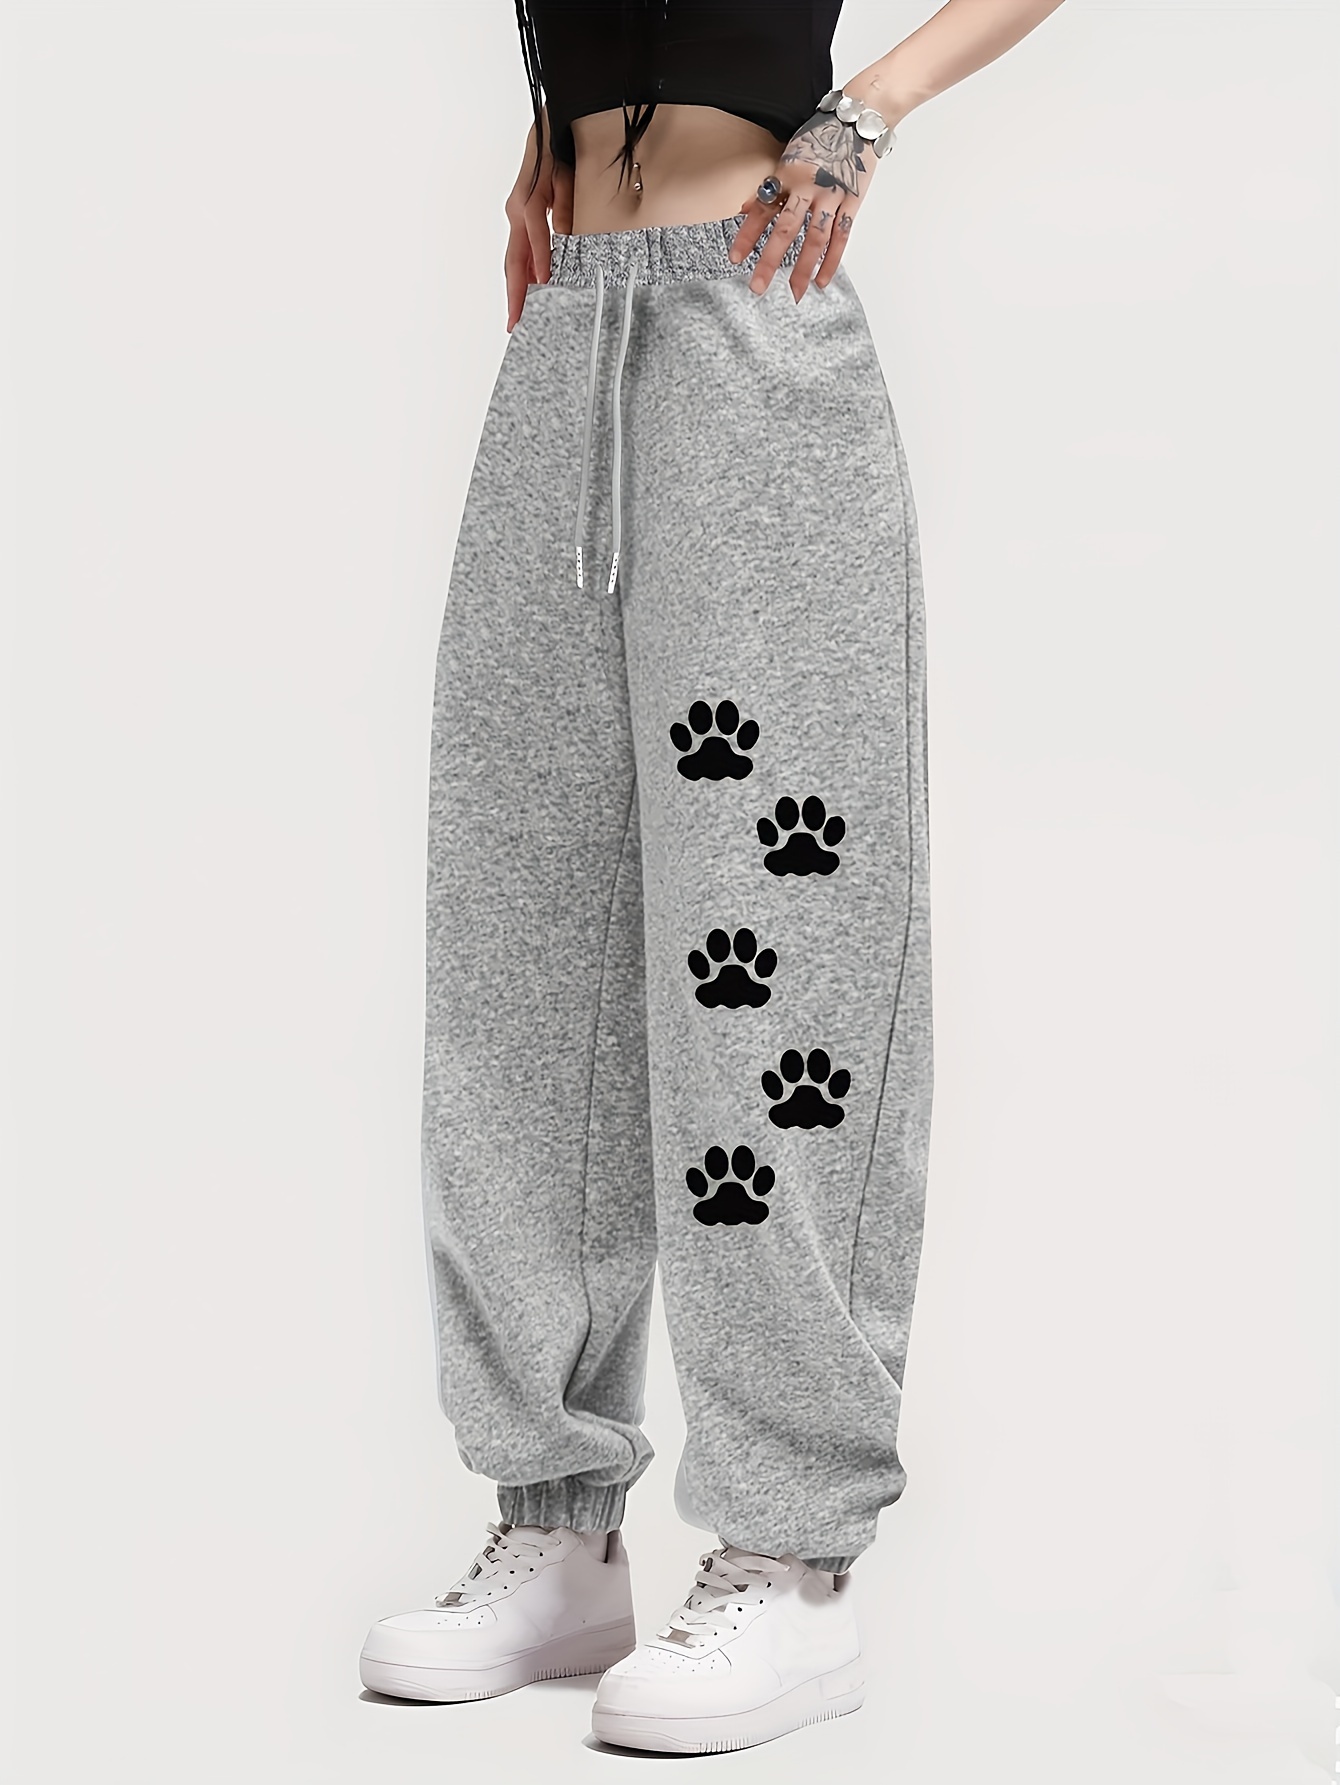 Cute Dog Print Elastic Pants, Drawstring High Waist Pants, Casual Every Day  Pants, Women's Clothing